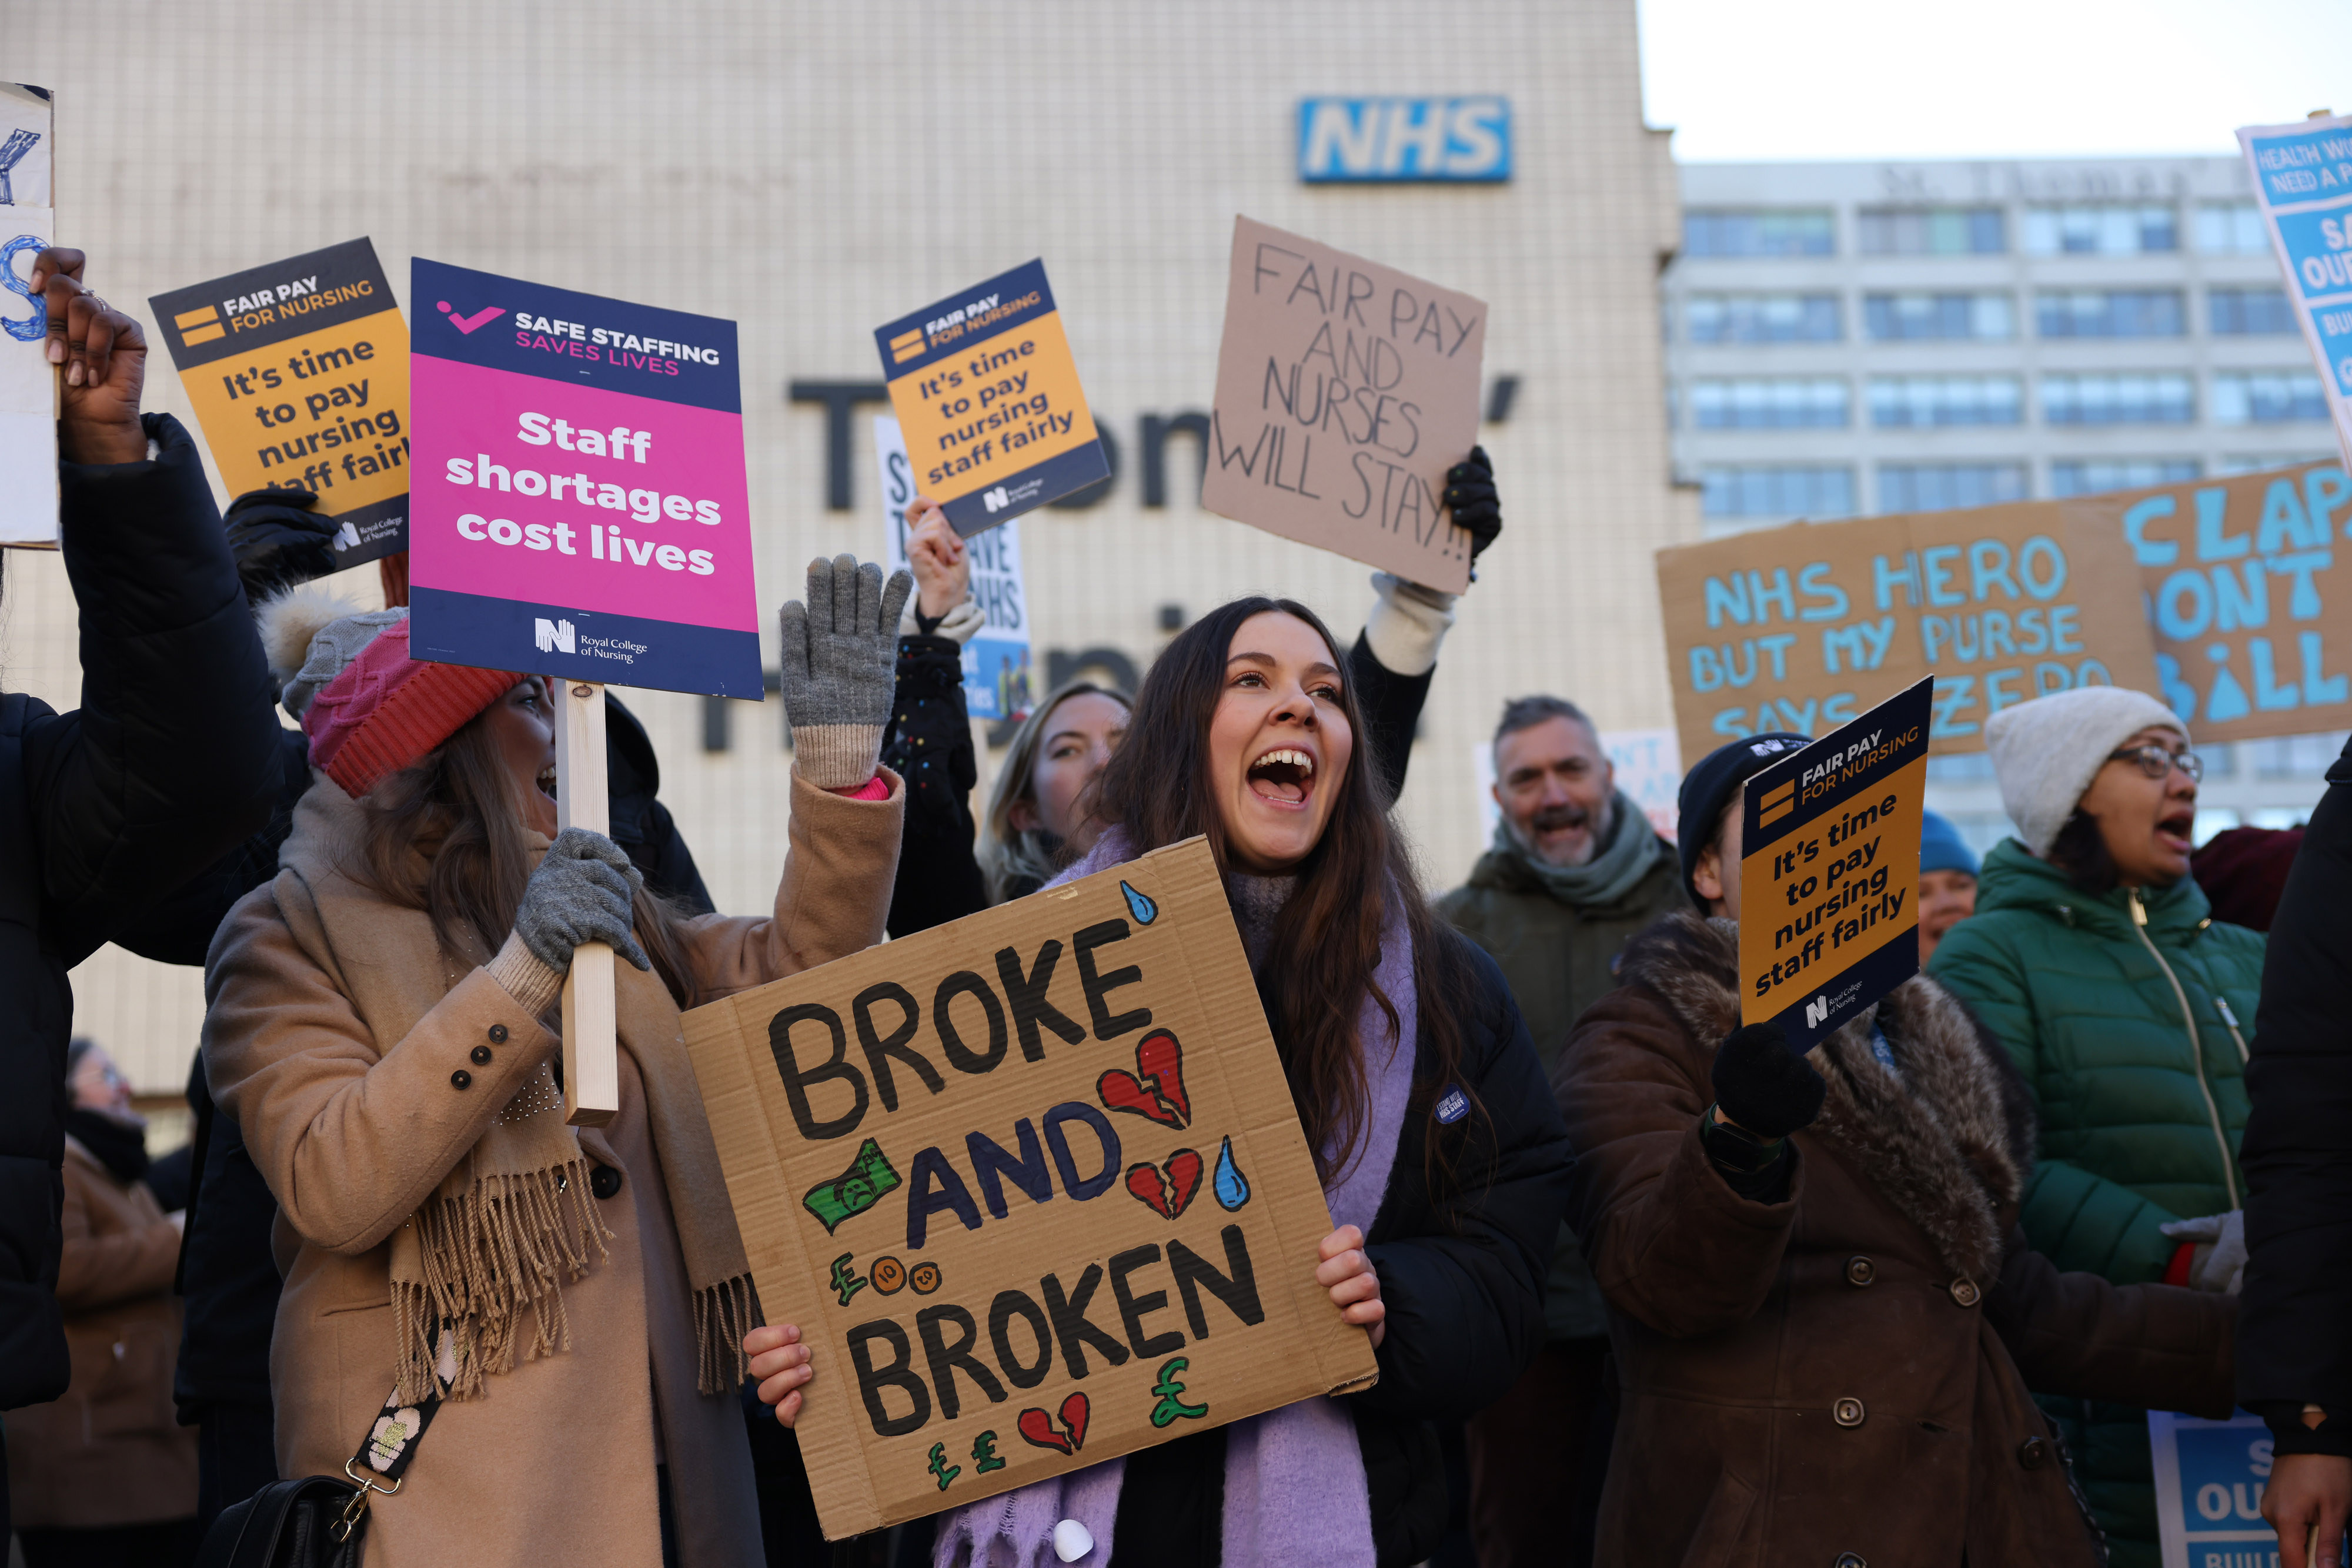 A strike by NHS nursing staff outside St. Thomas' Hospital in London.